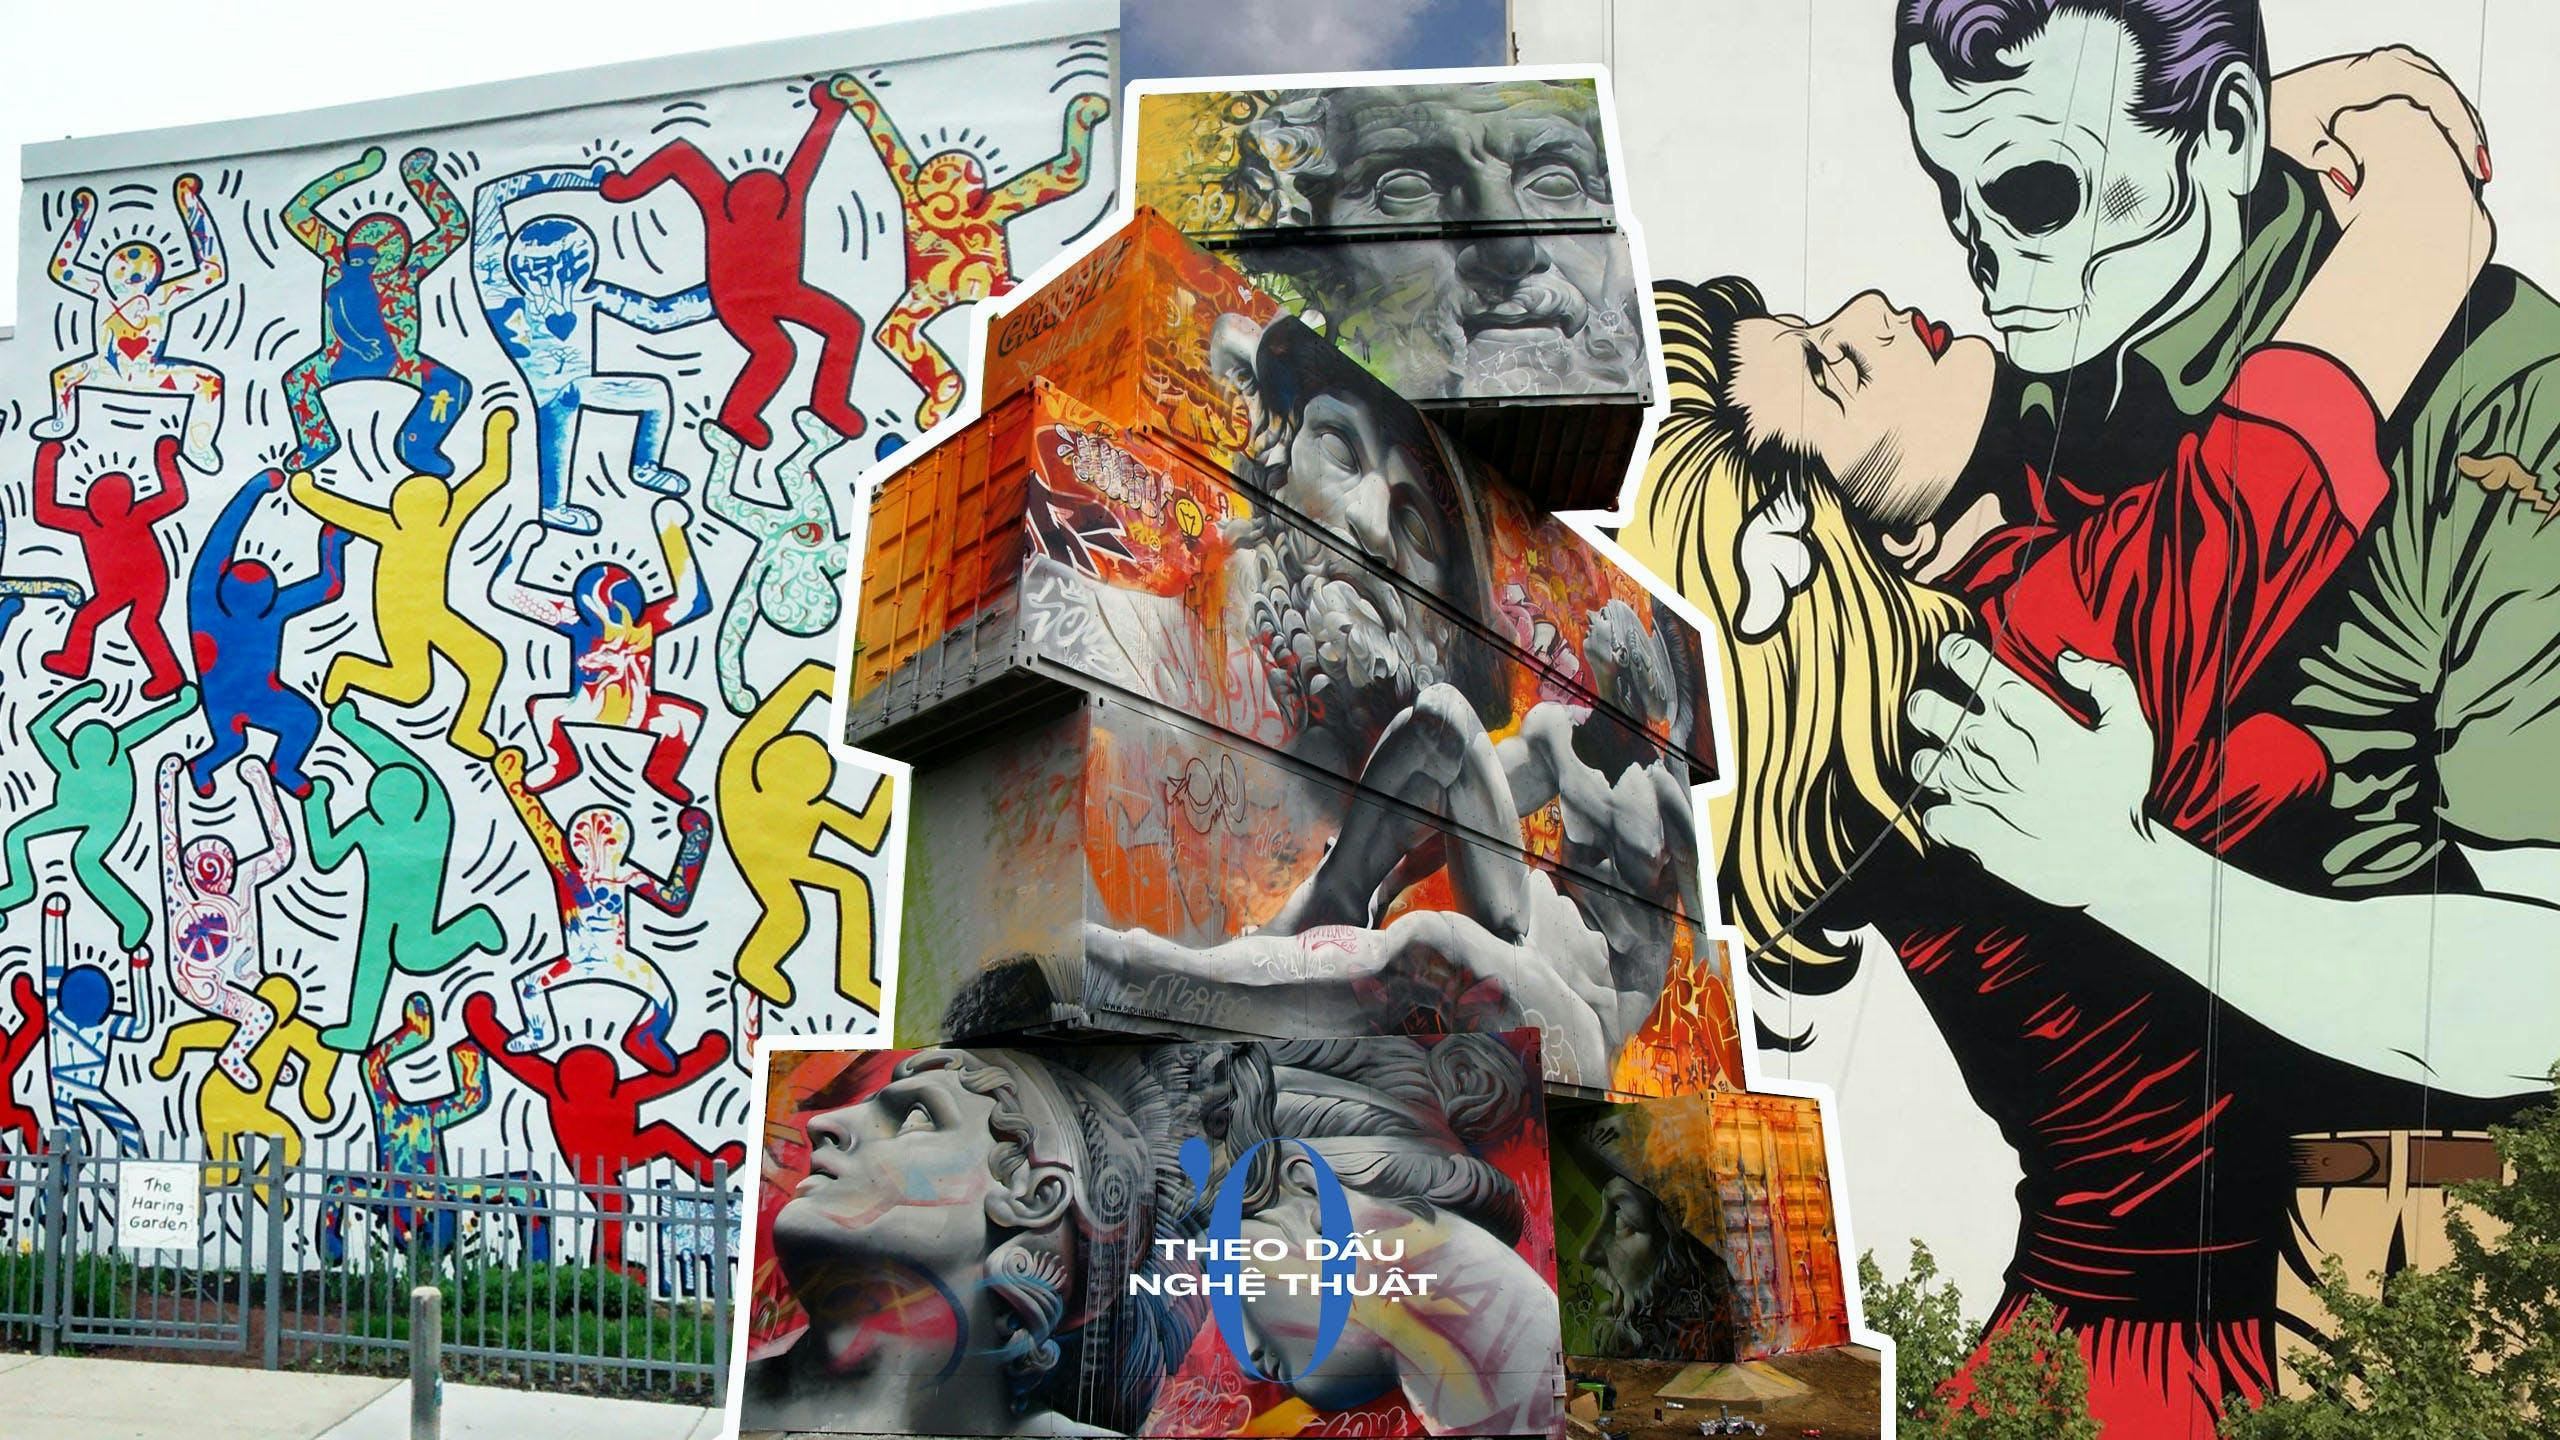 graffiti art collage advertisement poster mural painting